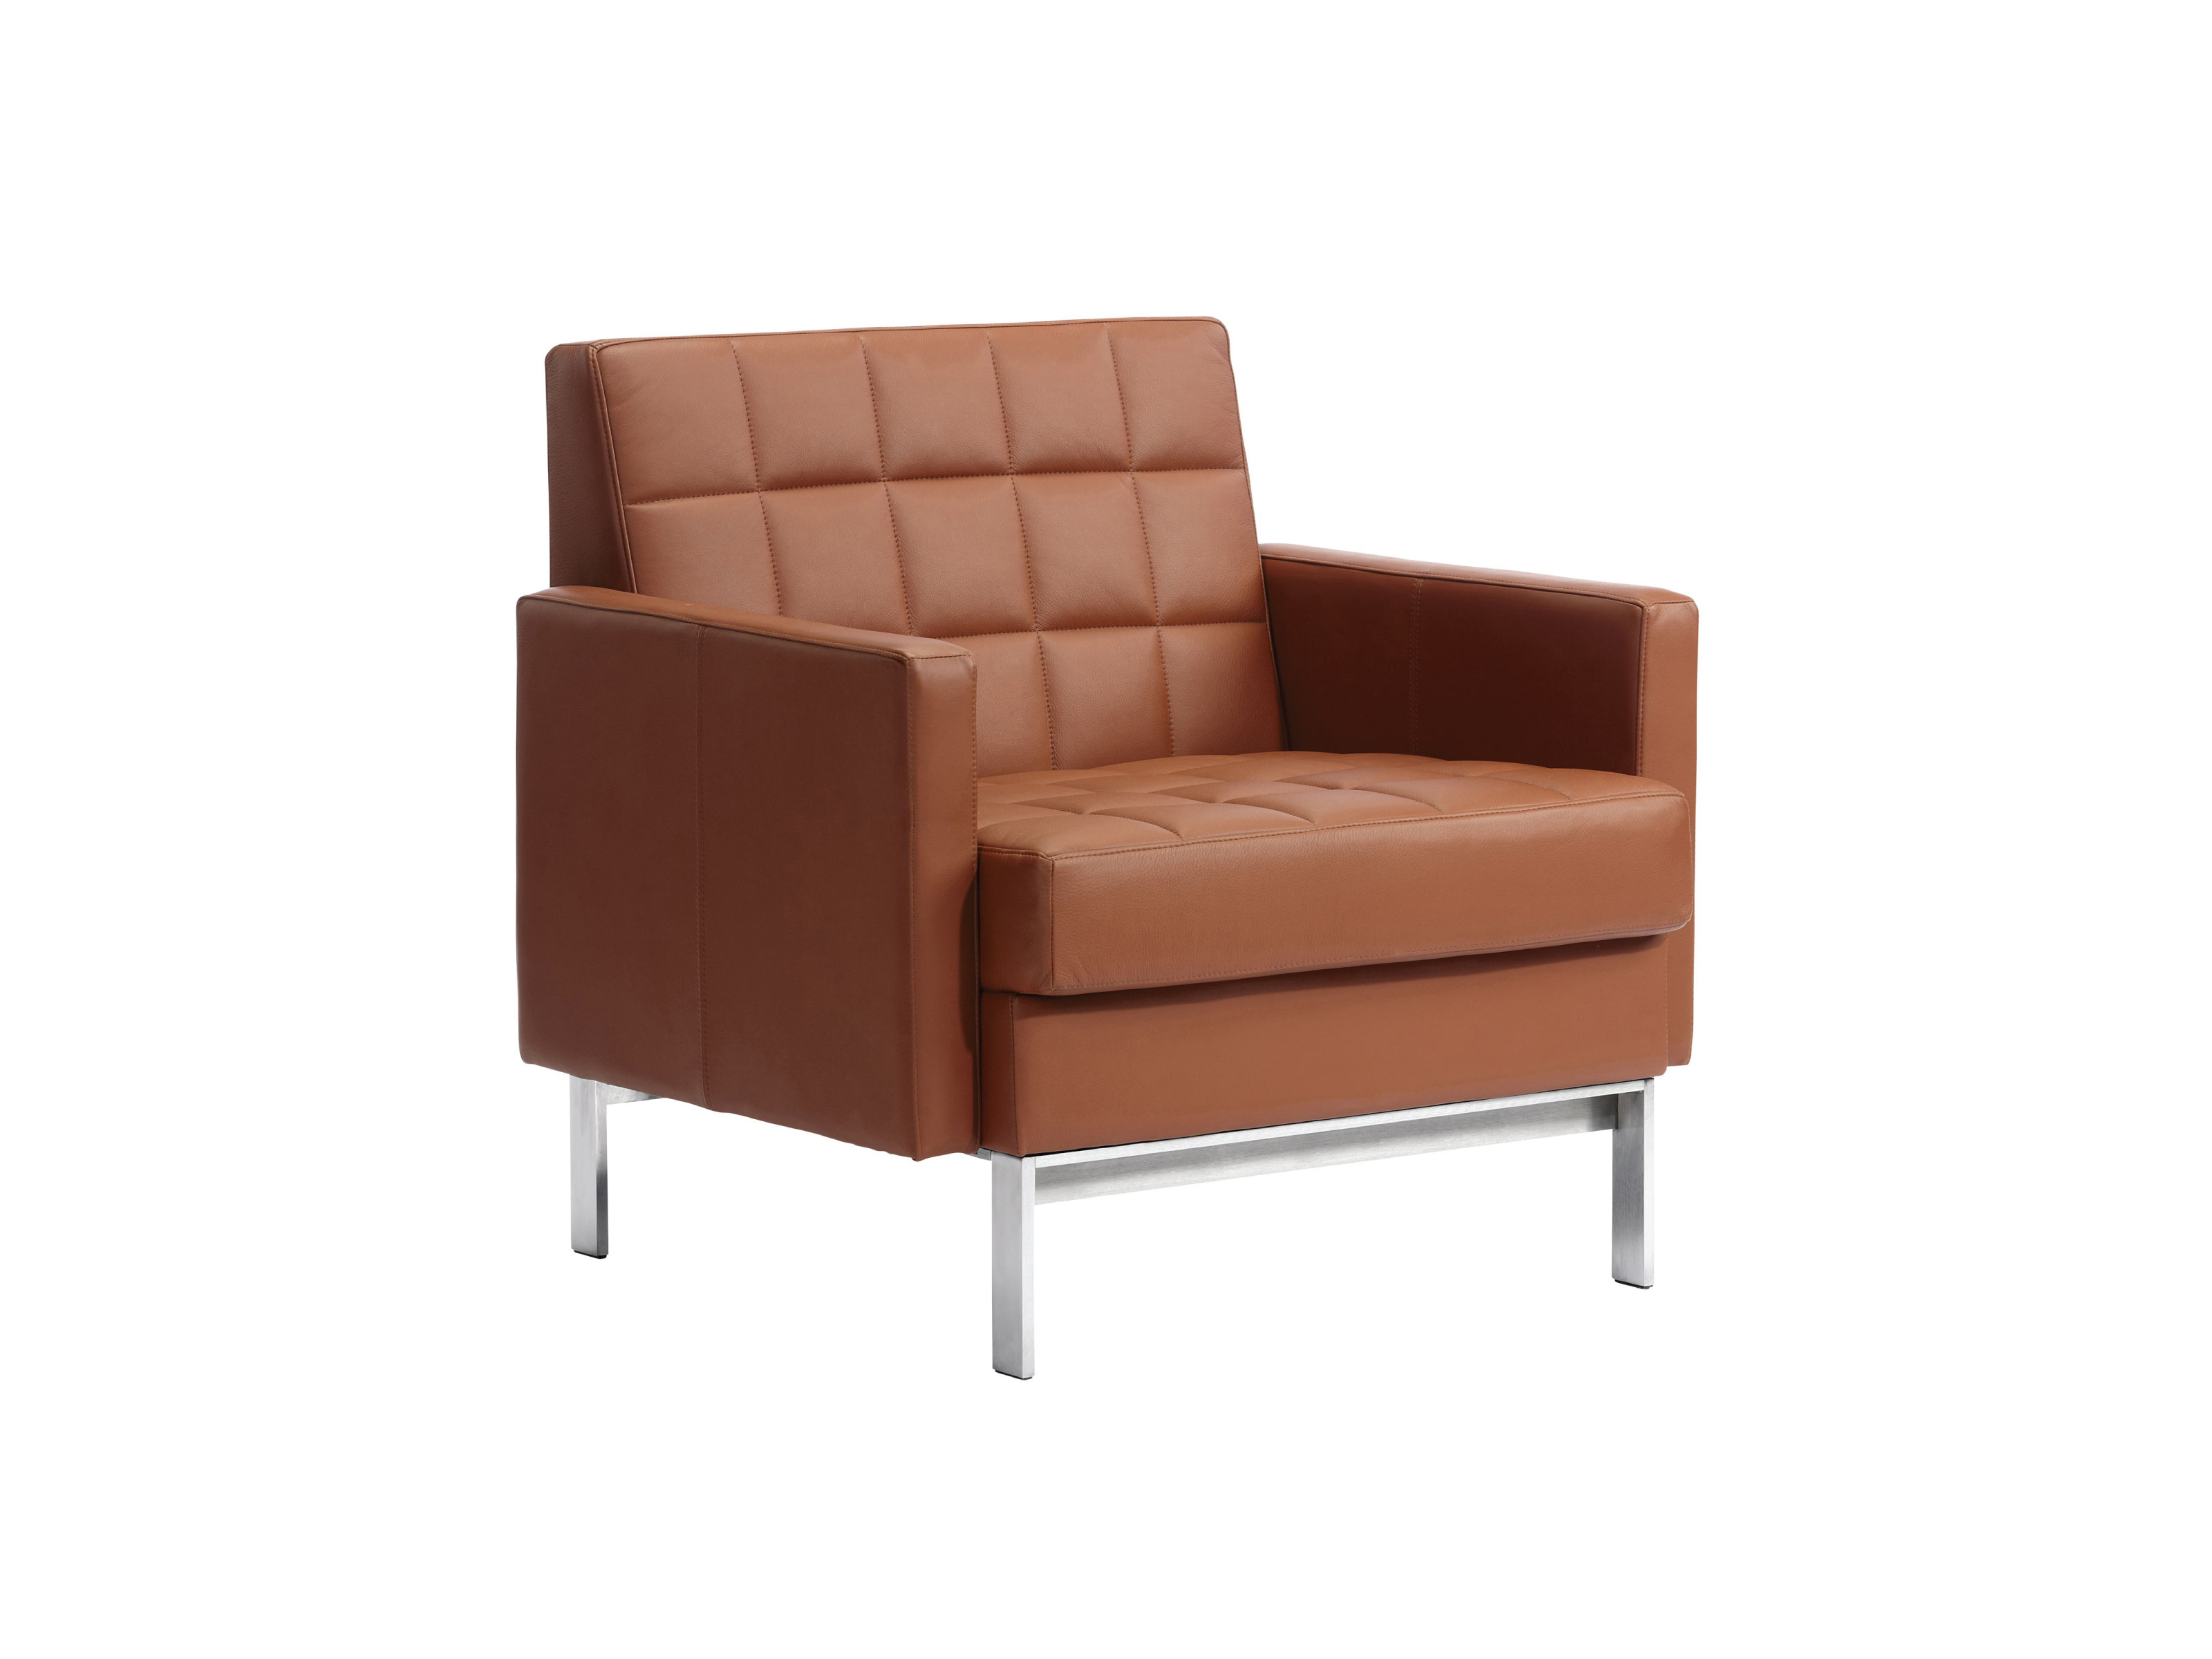 Bob Premium Lounge Chair by Coalesse